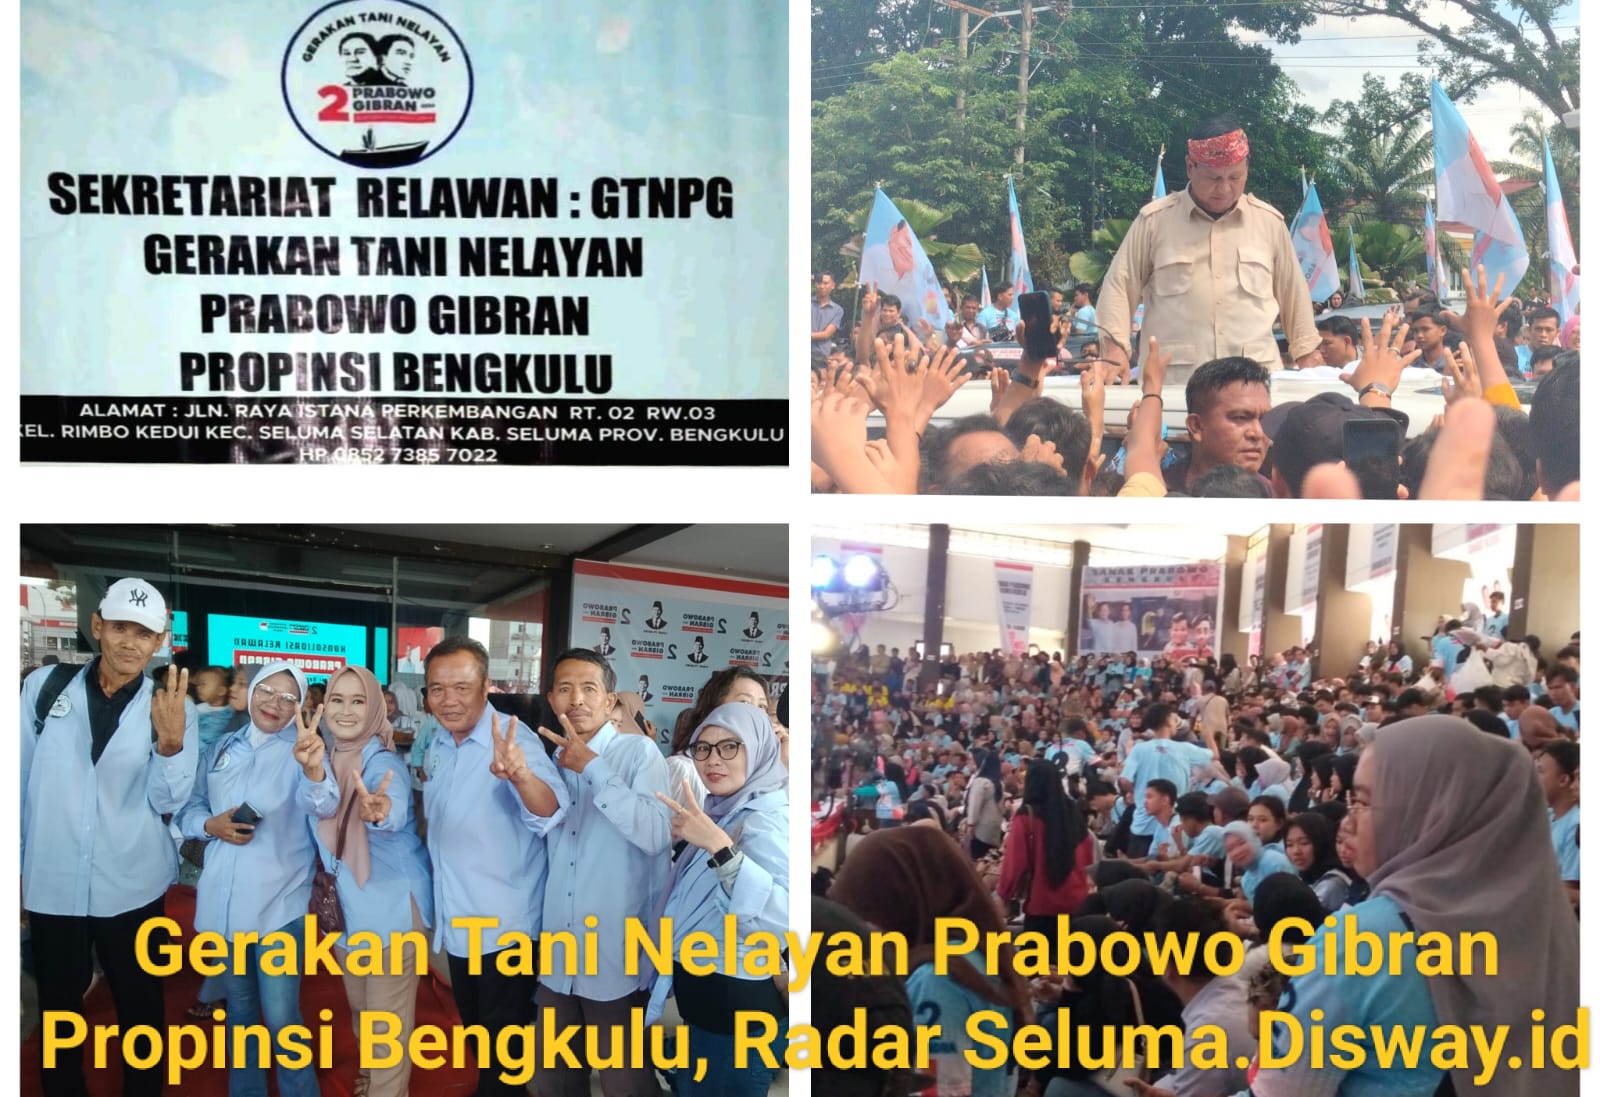 Gerakan Tani Nelayan Prabowo Gibran (GTNPG) Propinsi Bengkulu Siap Menangkan Prabowo Gibran 